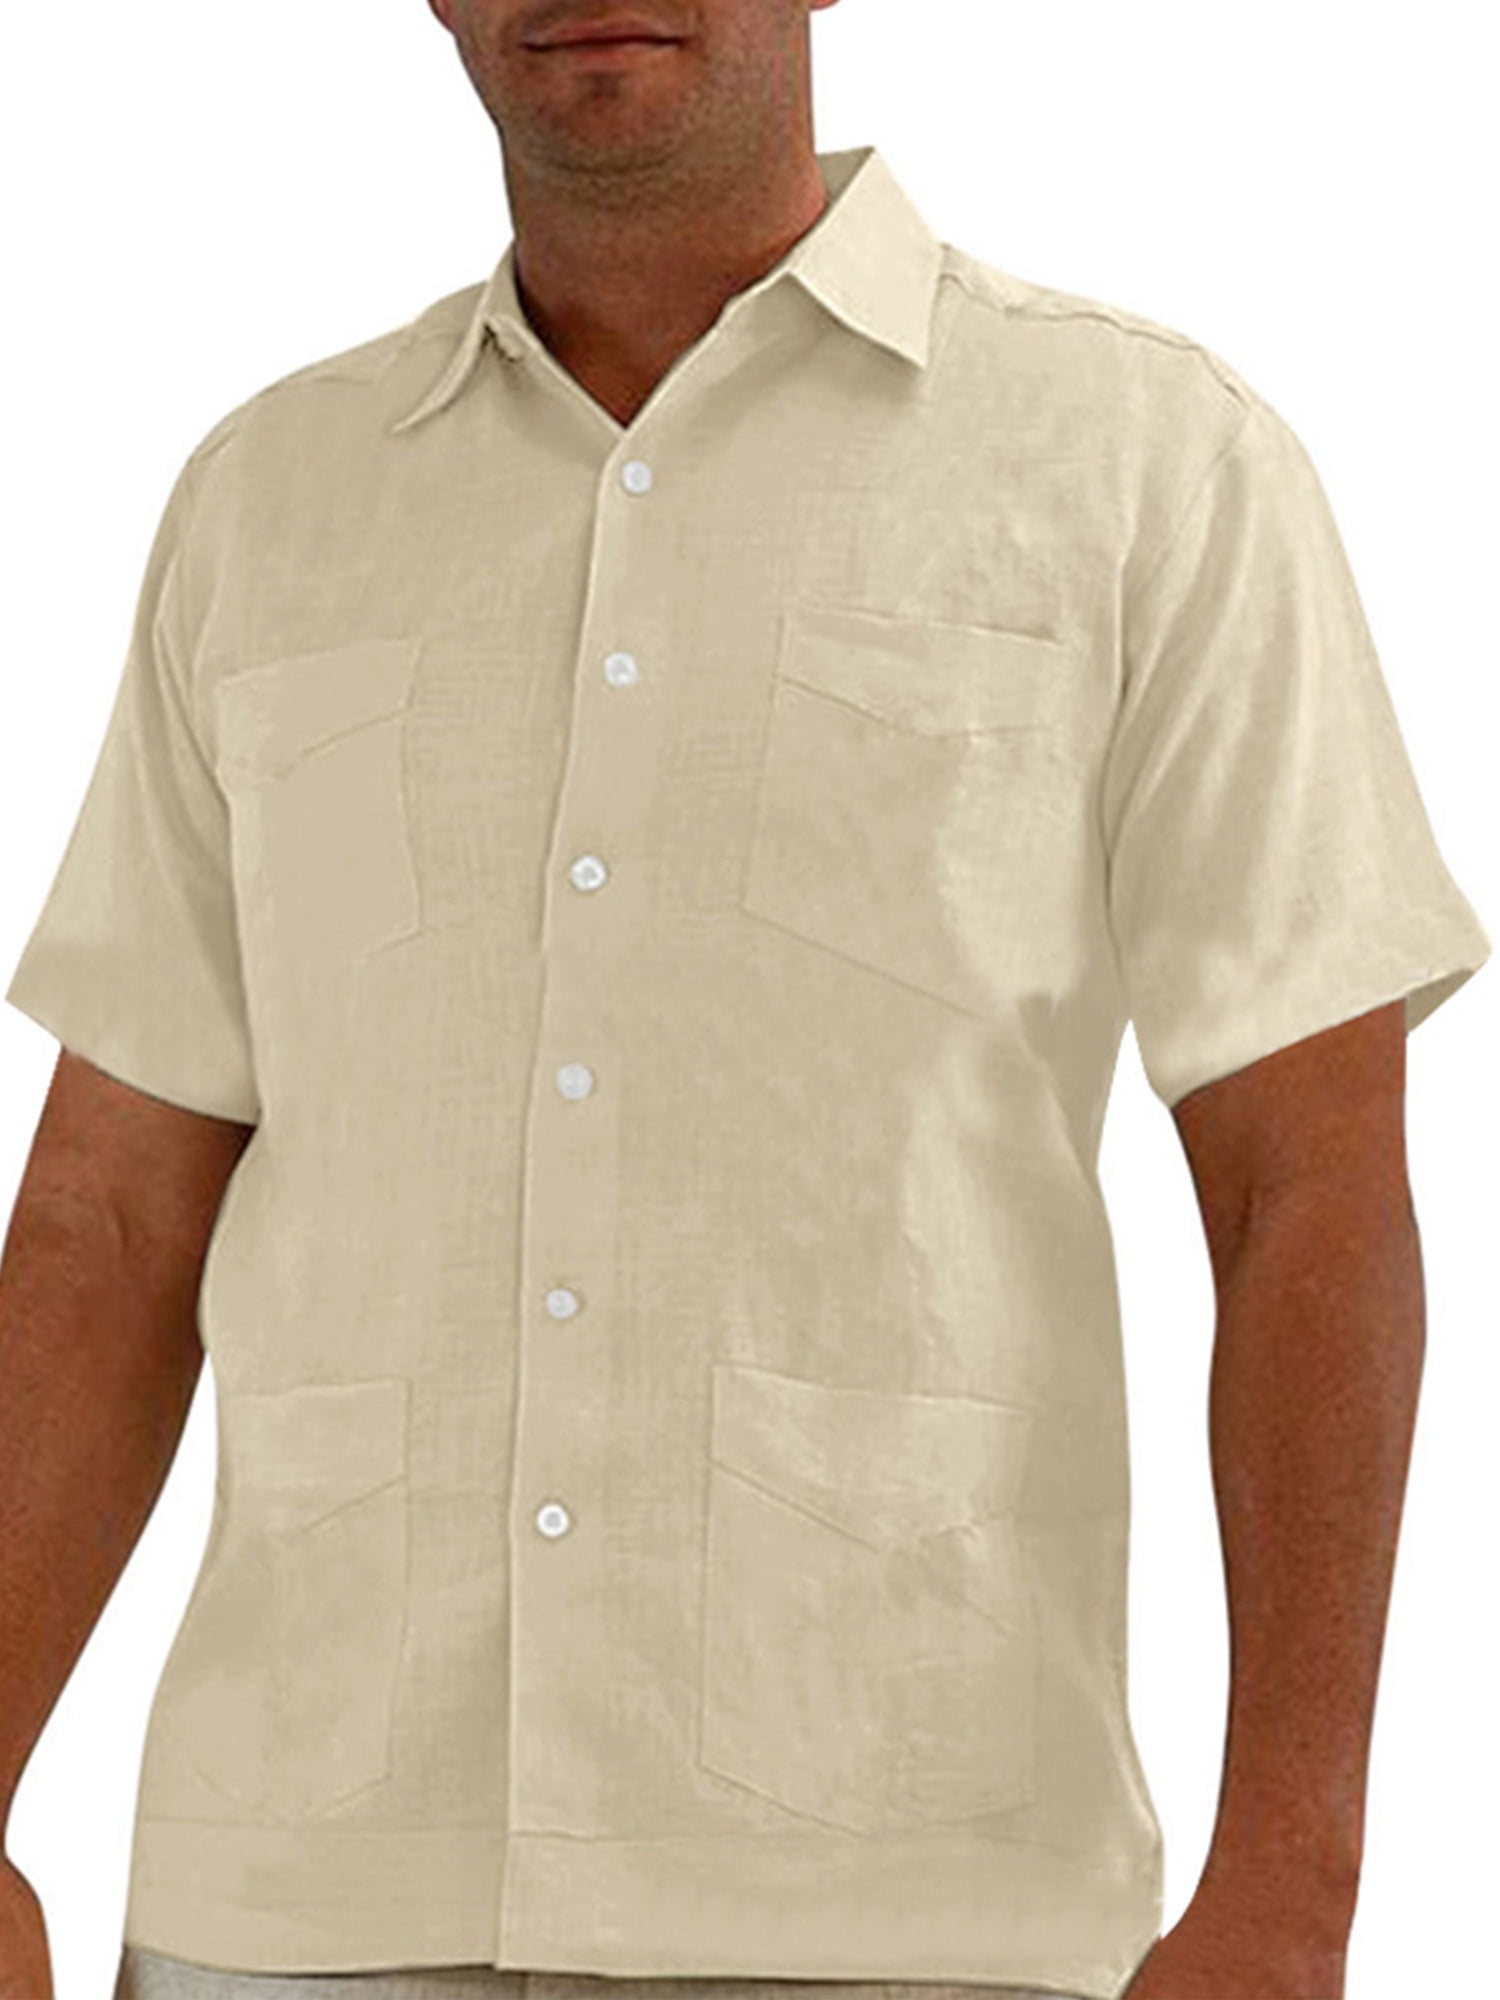 Mnyycxen Mens Work Shirt Long Sleeve Fishing Shirt Button Down Business Shirt with Pocket Big and Tall 